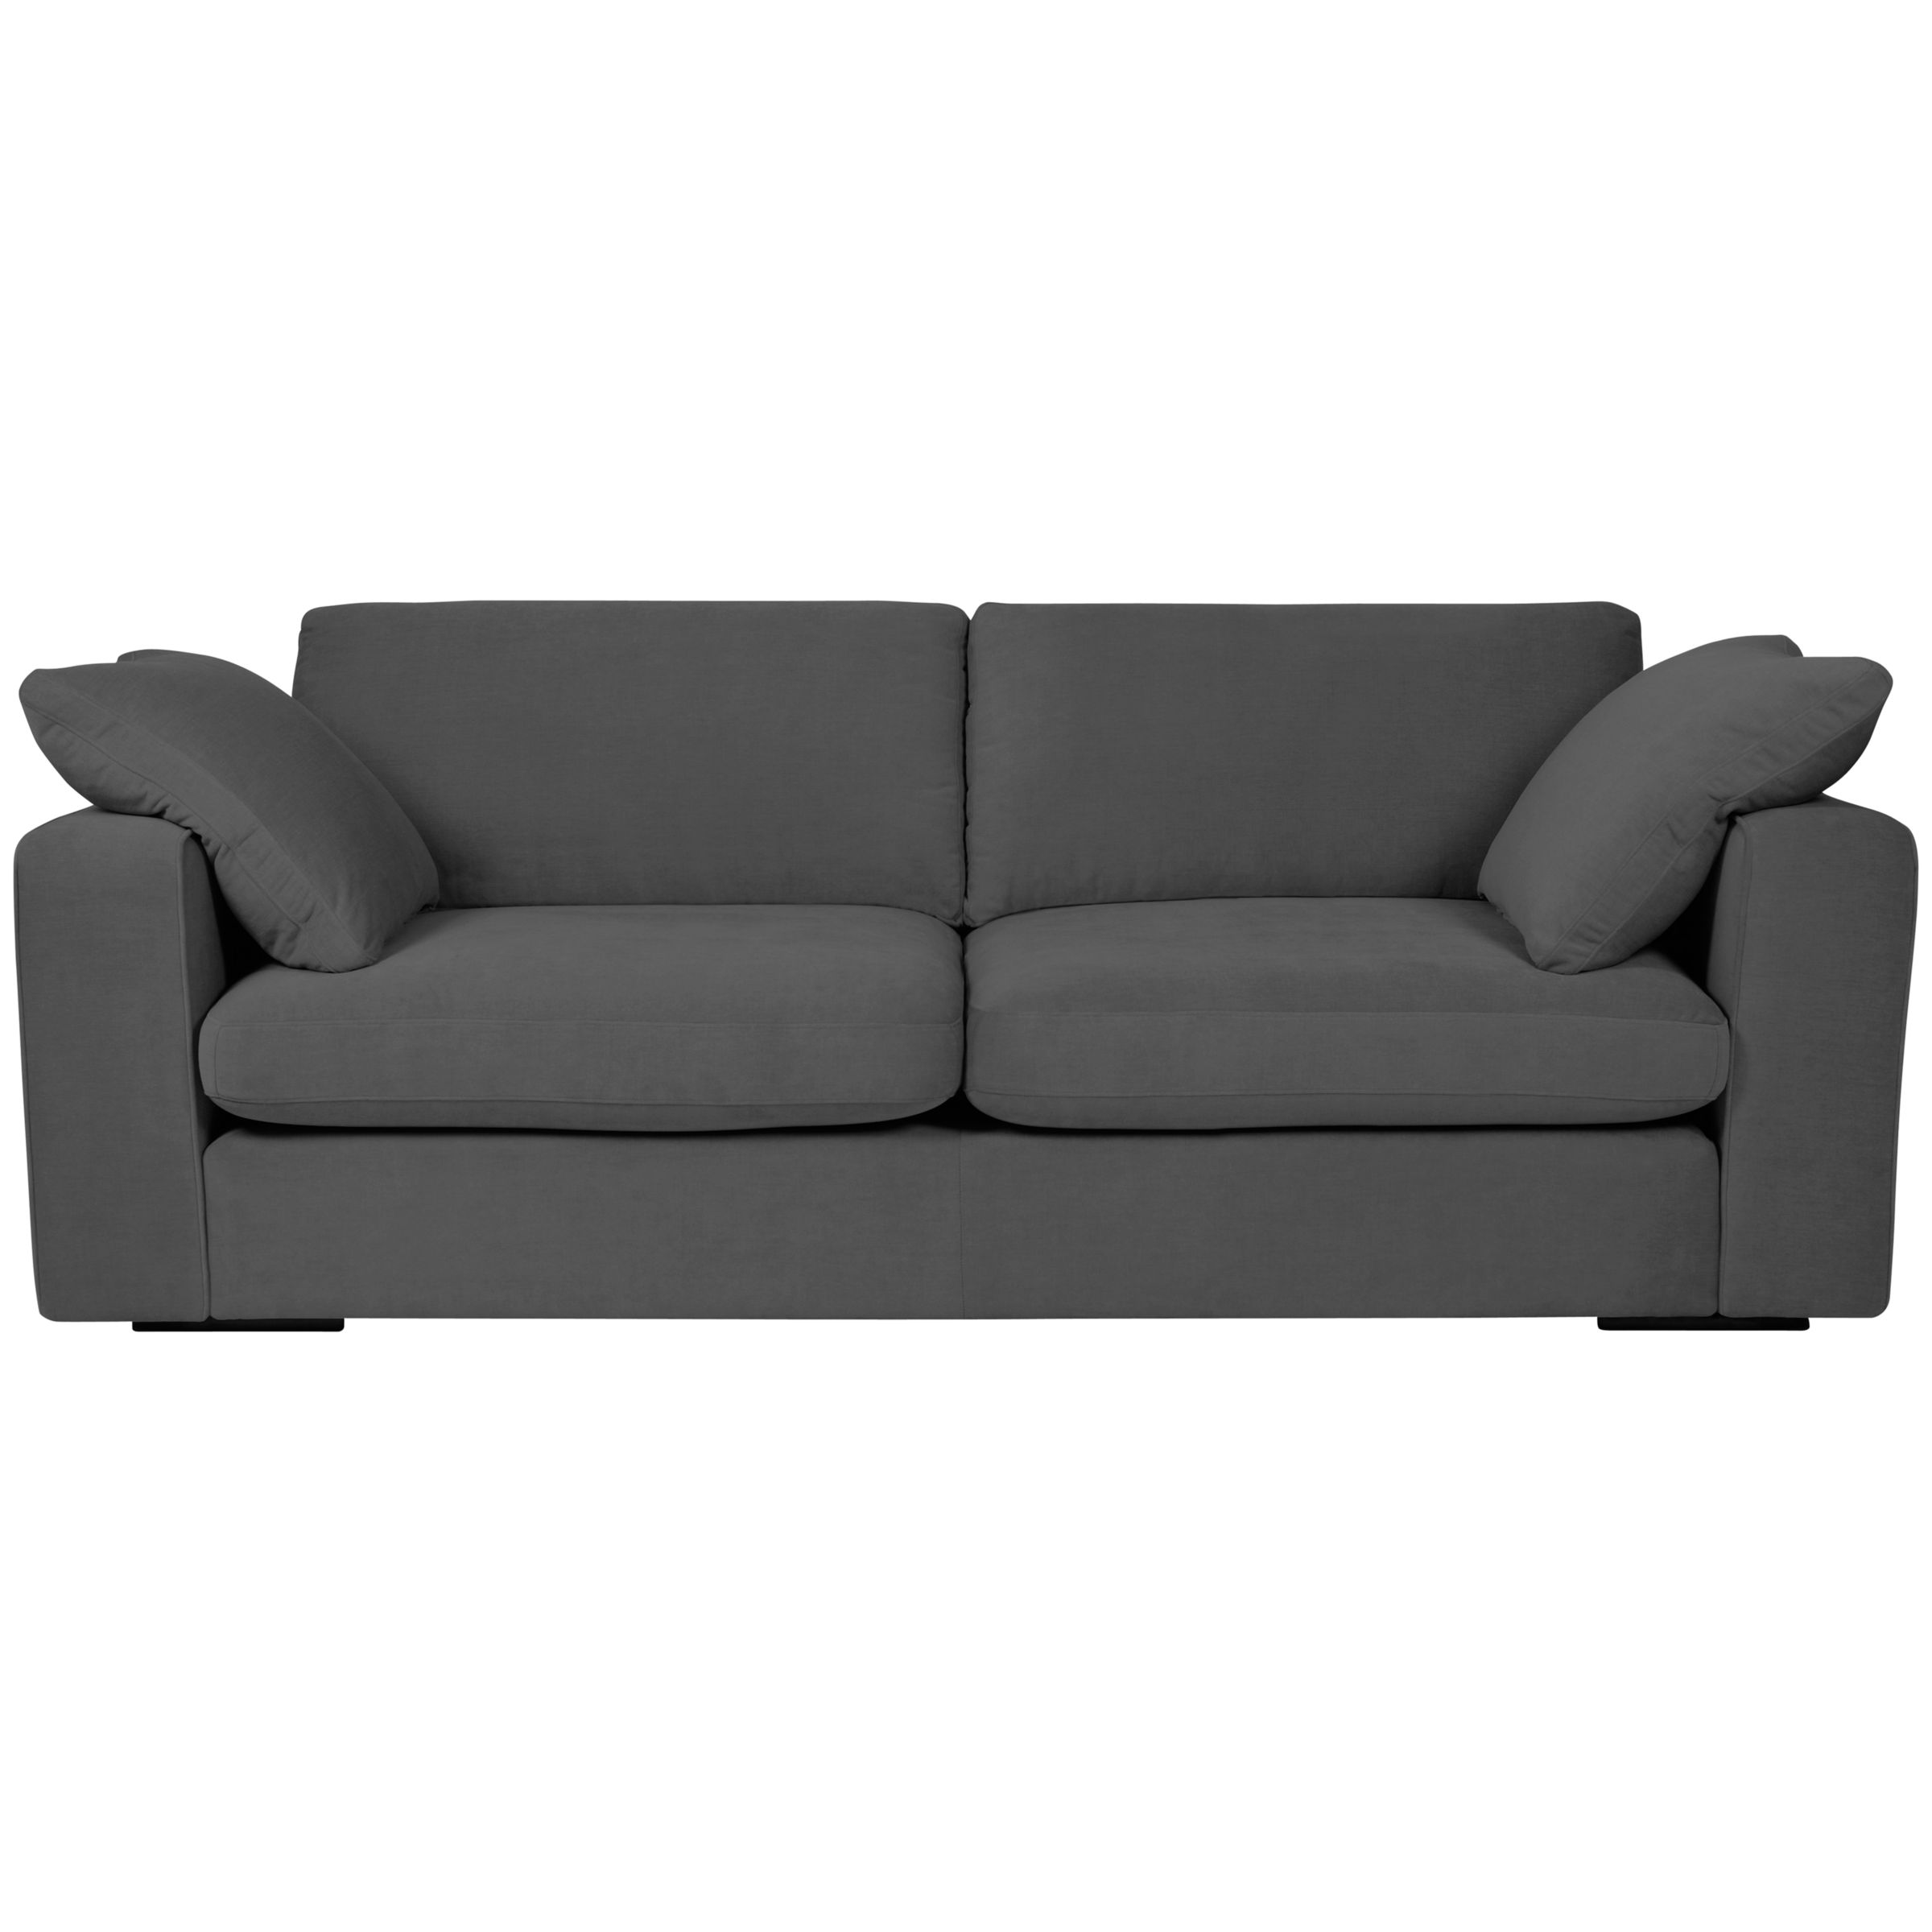 John Lewis Jones Options 2 Square Arm Grand Sofa, Shadow, width 228cm